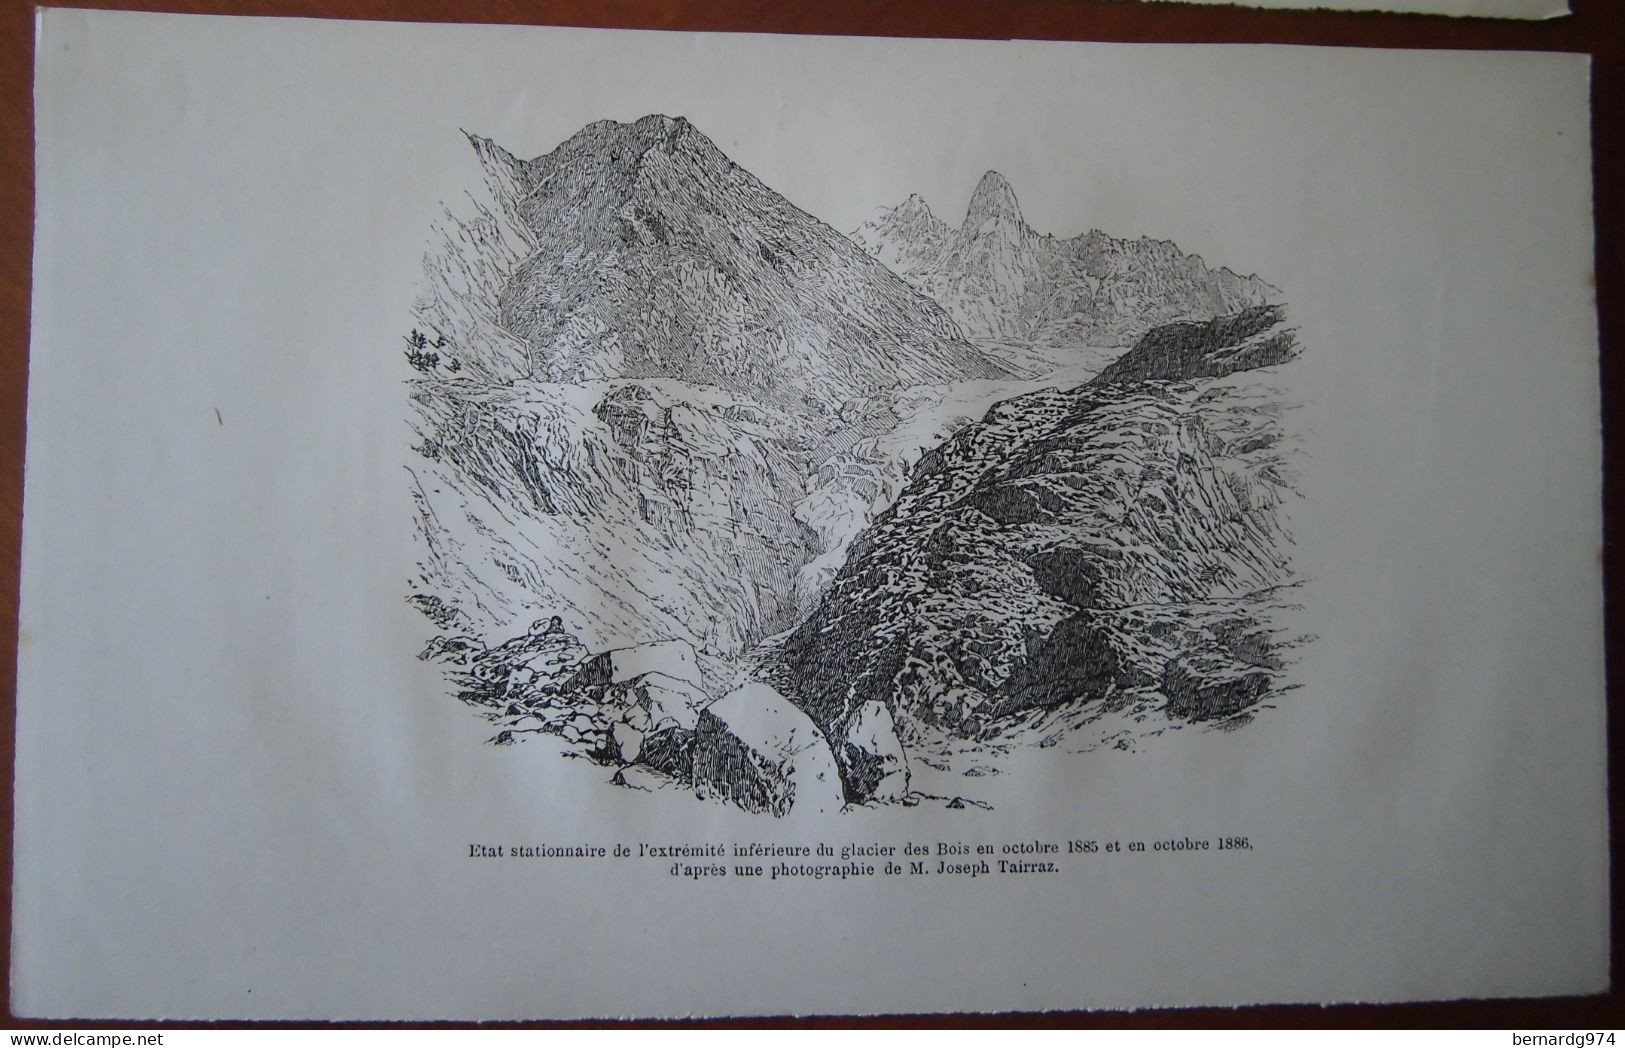 Alpes : quatre gravures anciennes du Club Alpin (1886)